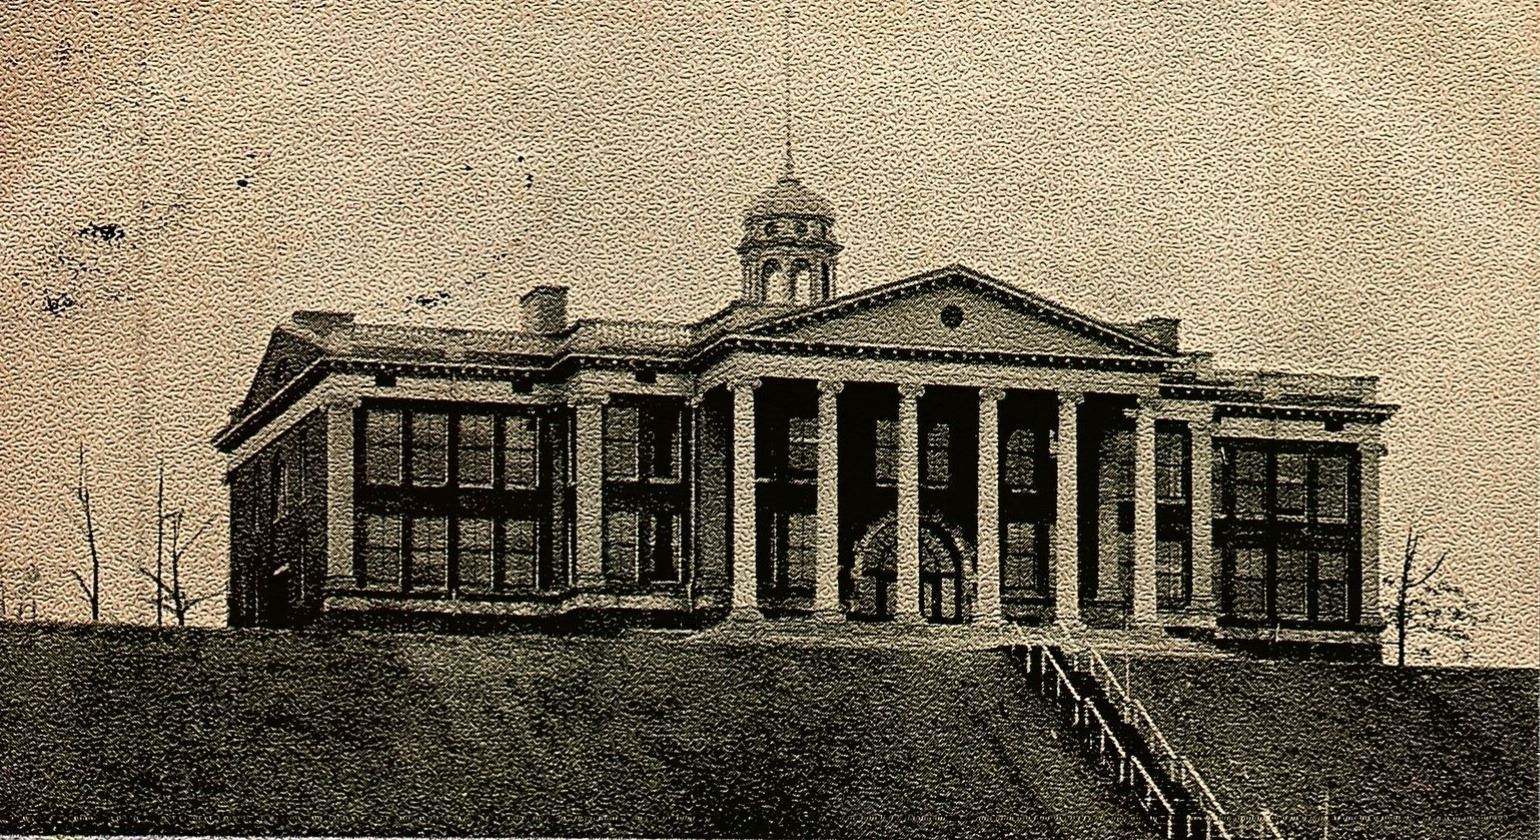 1906 KALAMAZOO MICHIGAN STATE NORMAL SCHOOL LITHOGRAPHIC POSTCARD 26-88